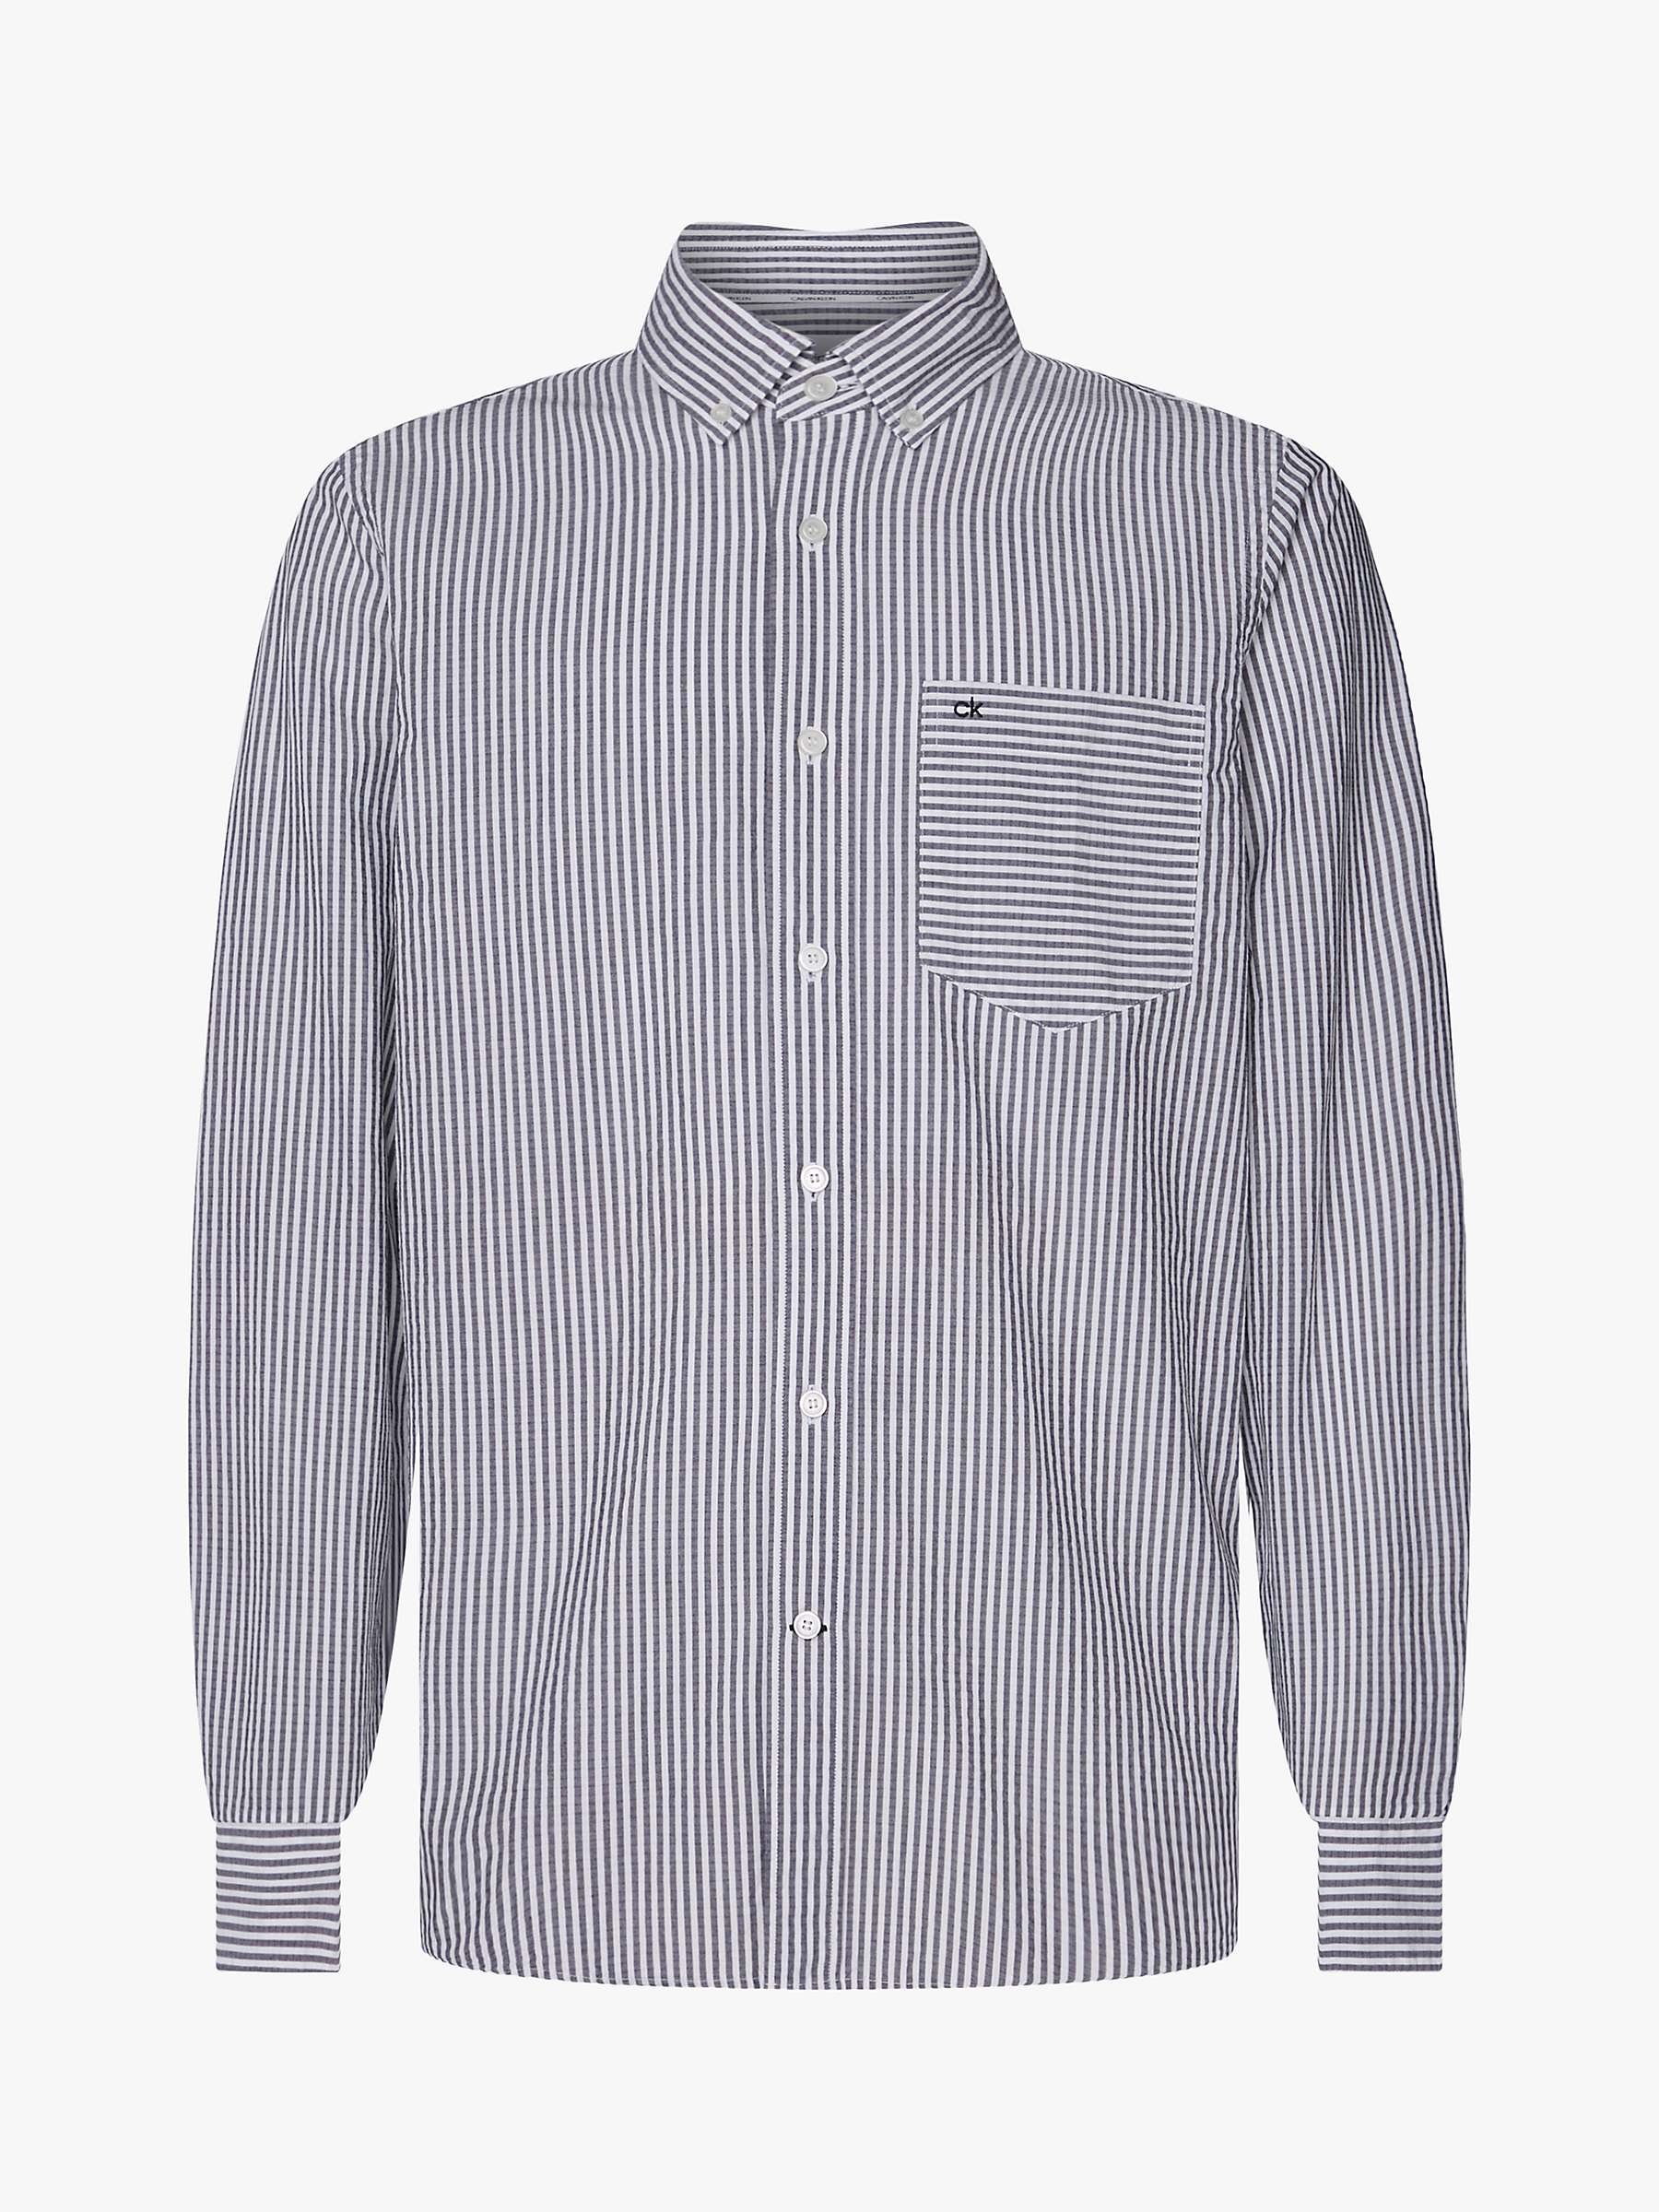 Buy Calvin Klein Heathered Stripe Shirt, Blue Online at johnlewis.com